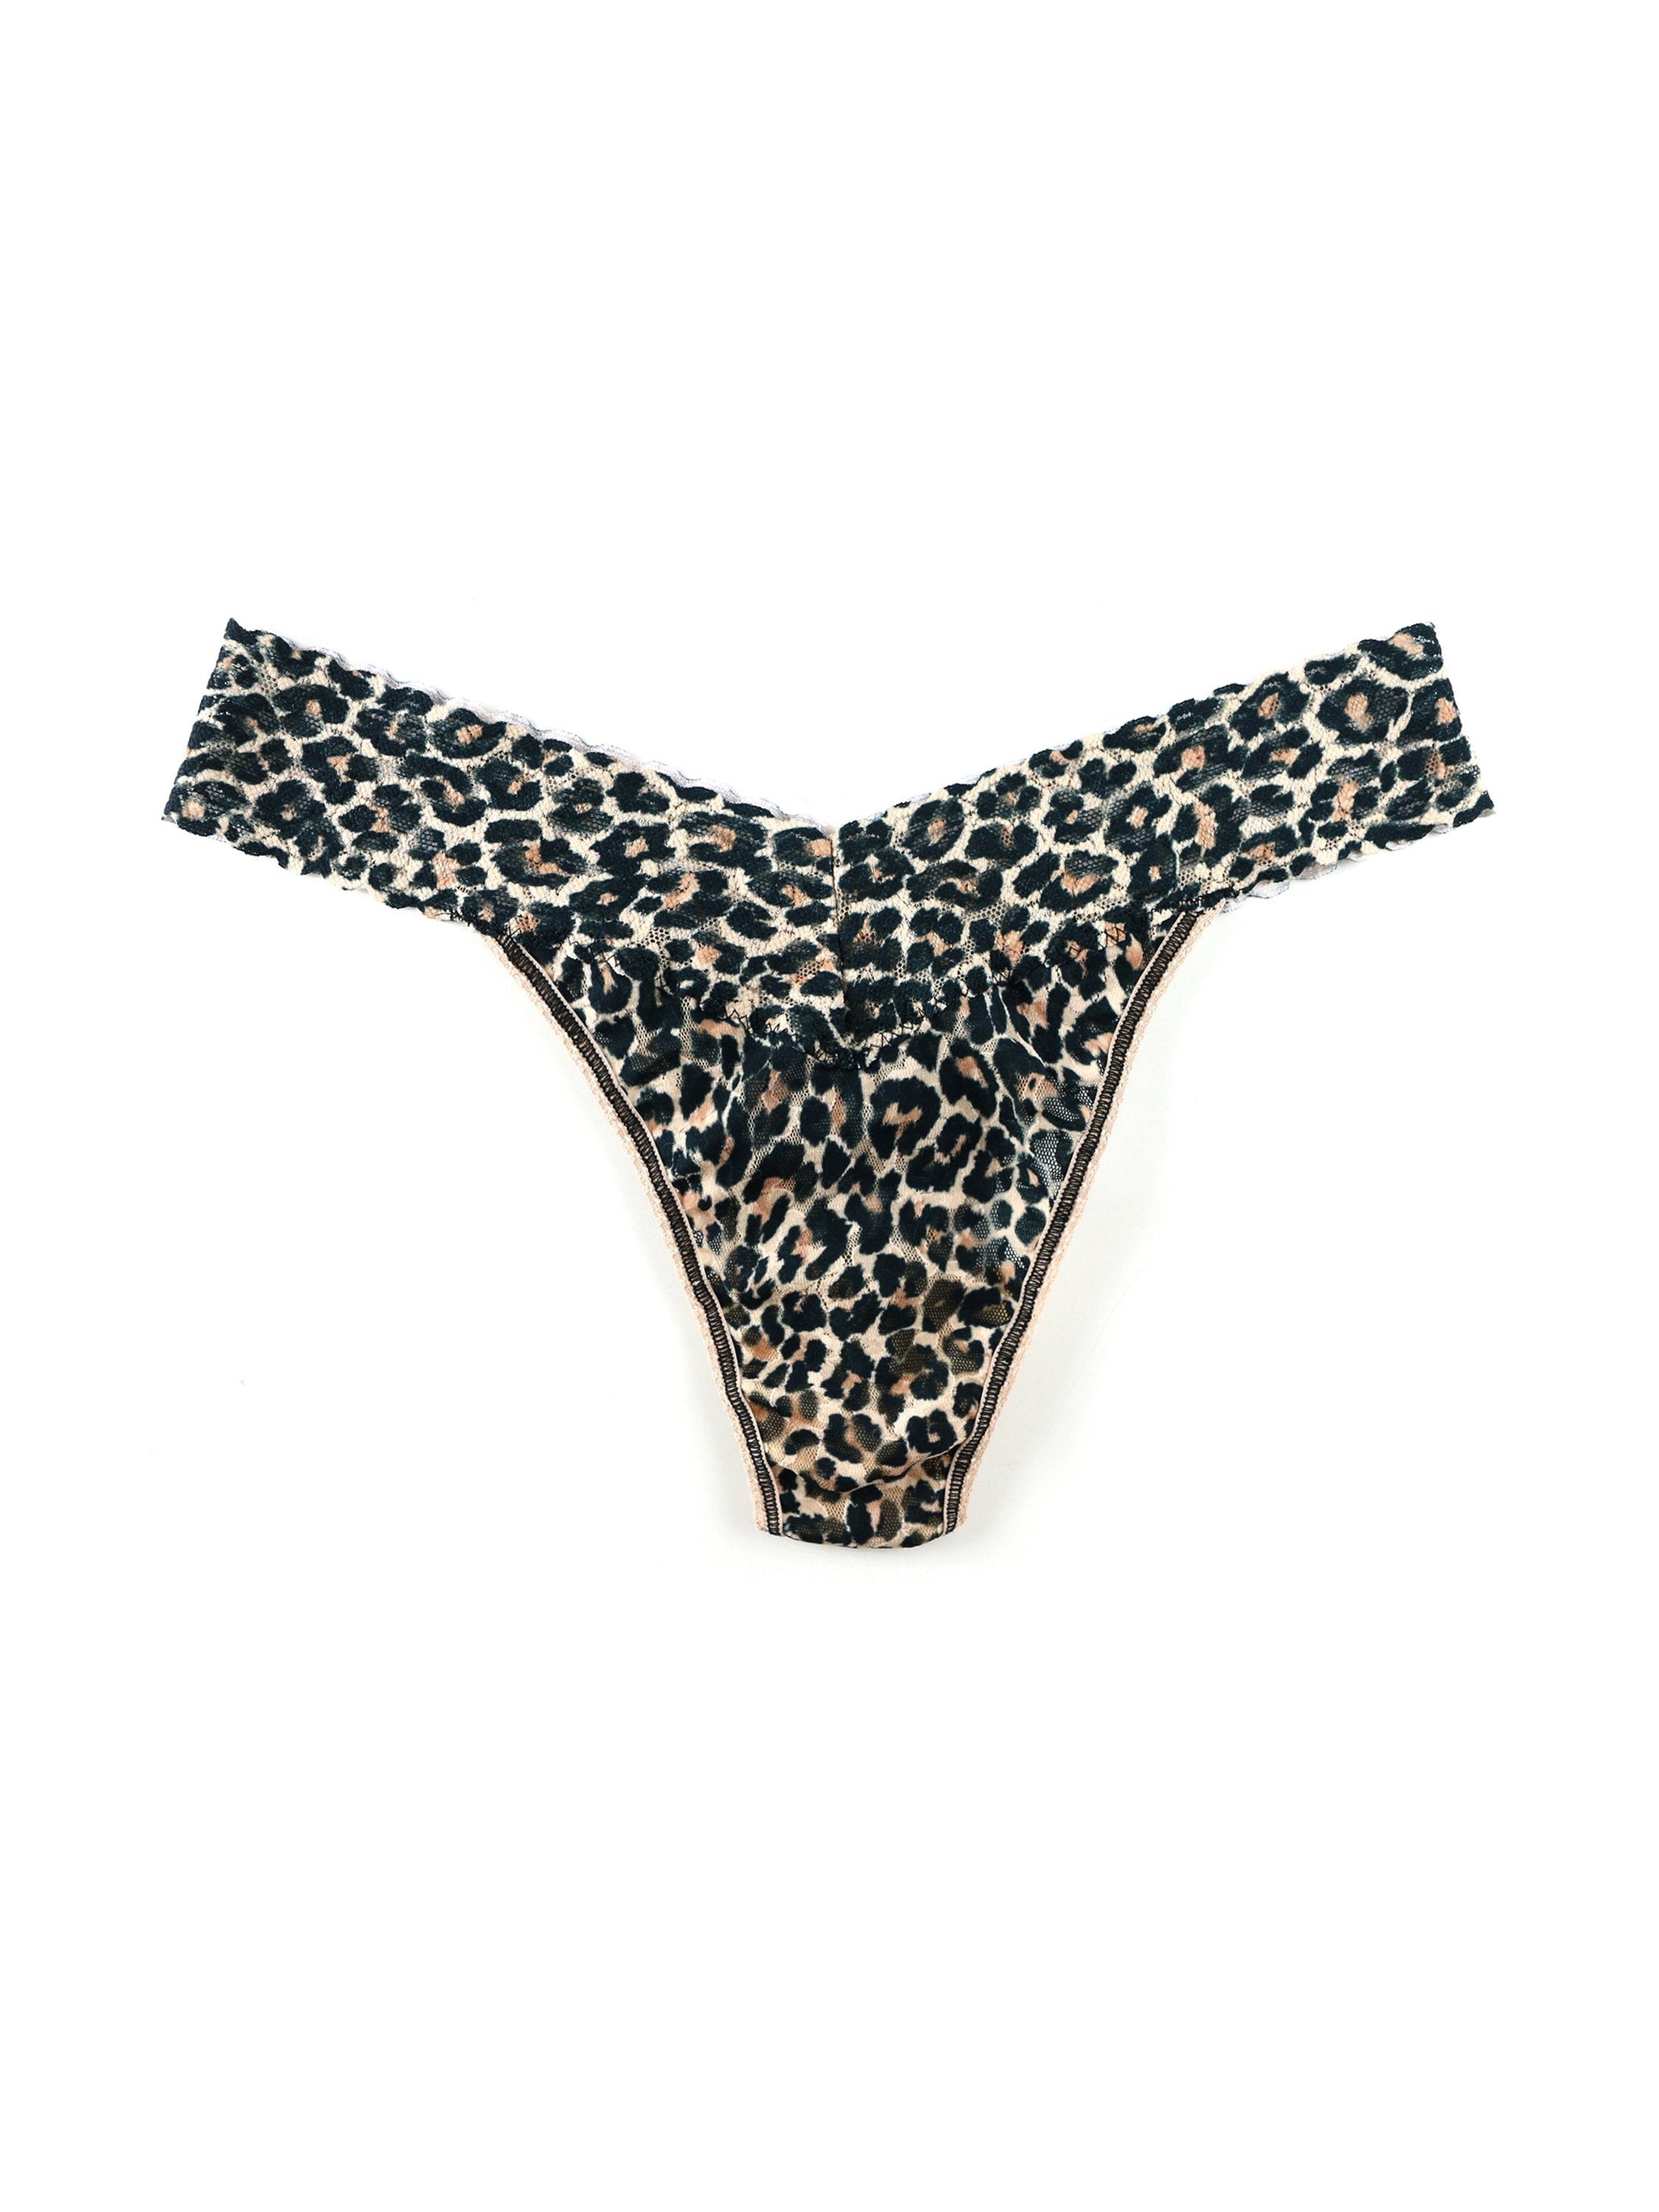 JUSLIO Seamless Underwear for Women Girls Underwear Panties for  Women,Animal Print Panties 